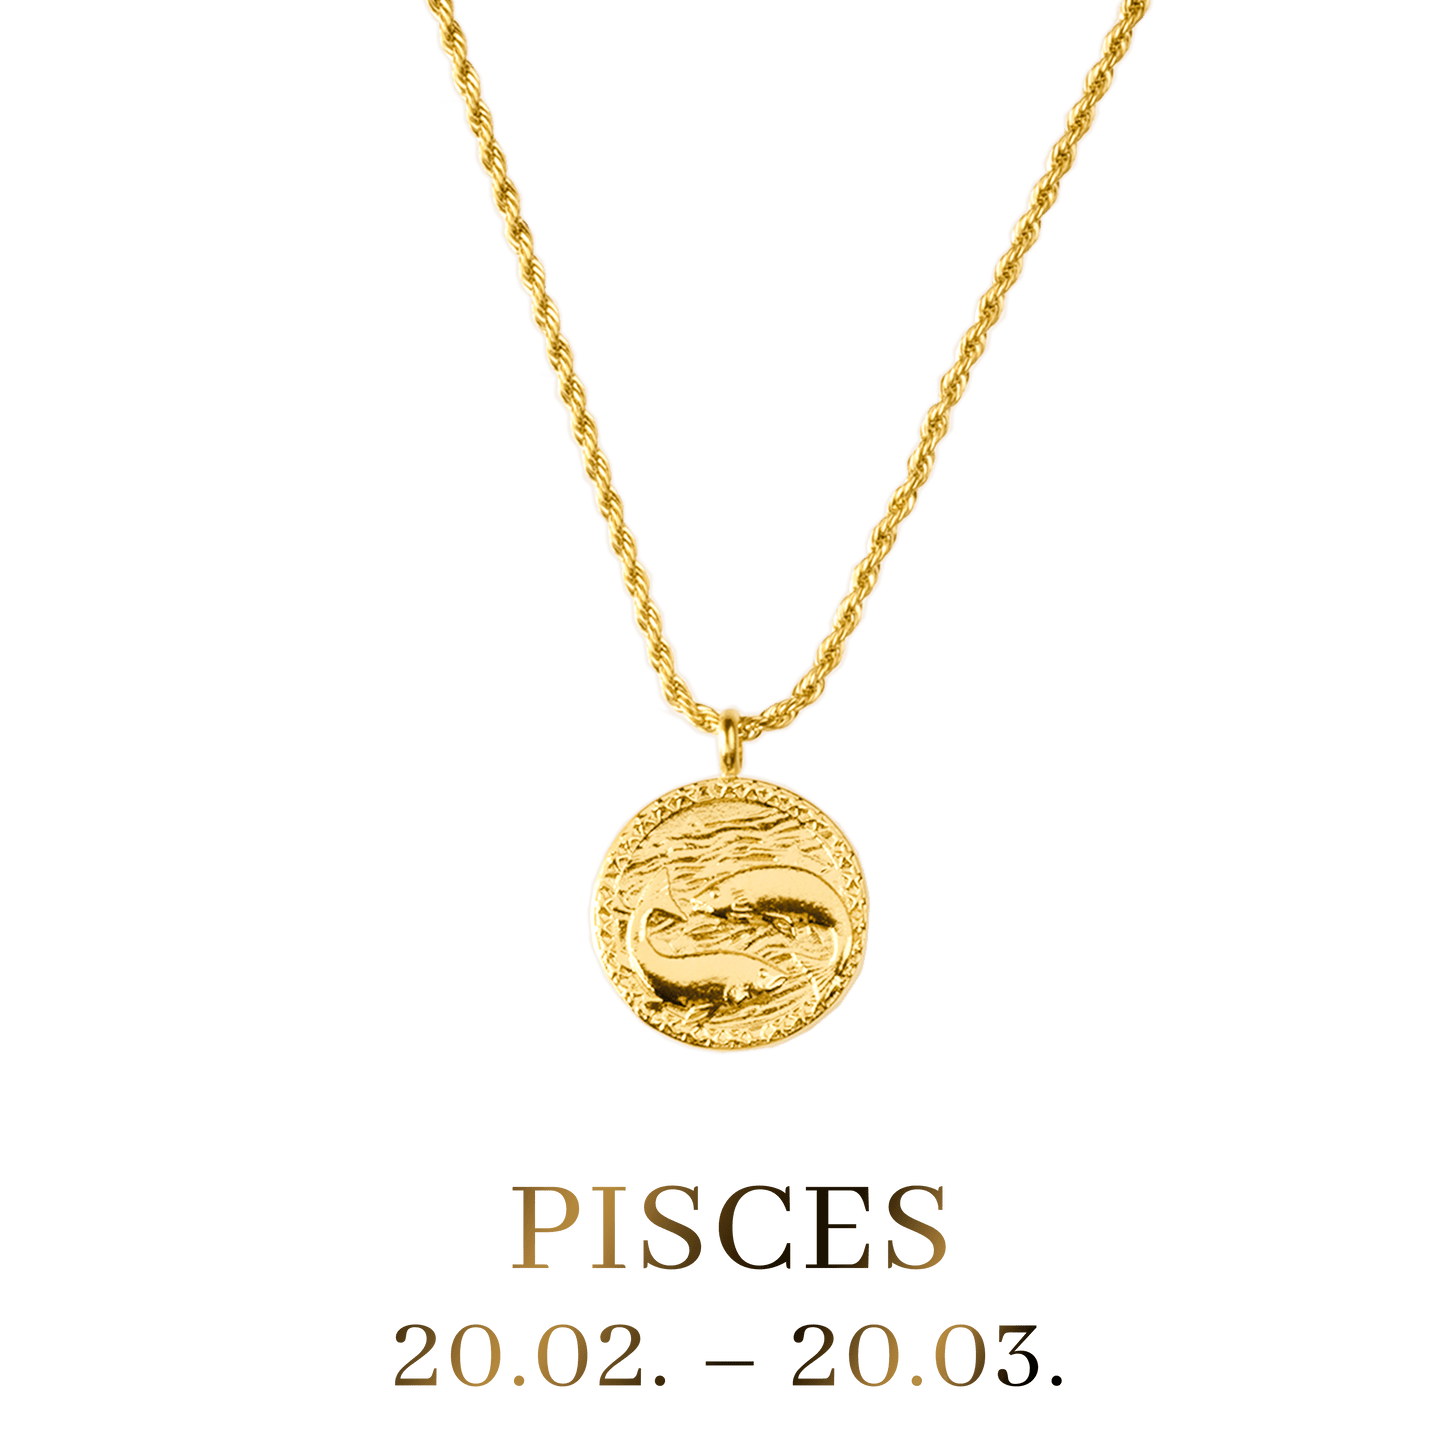 Pisces / Fische Necklace Gold